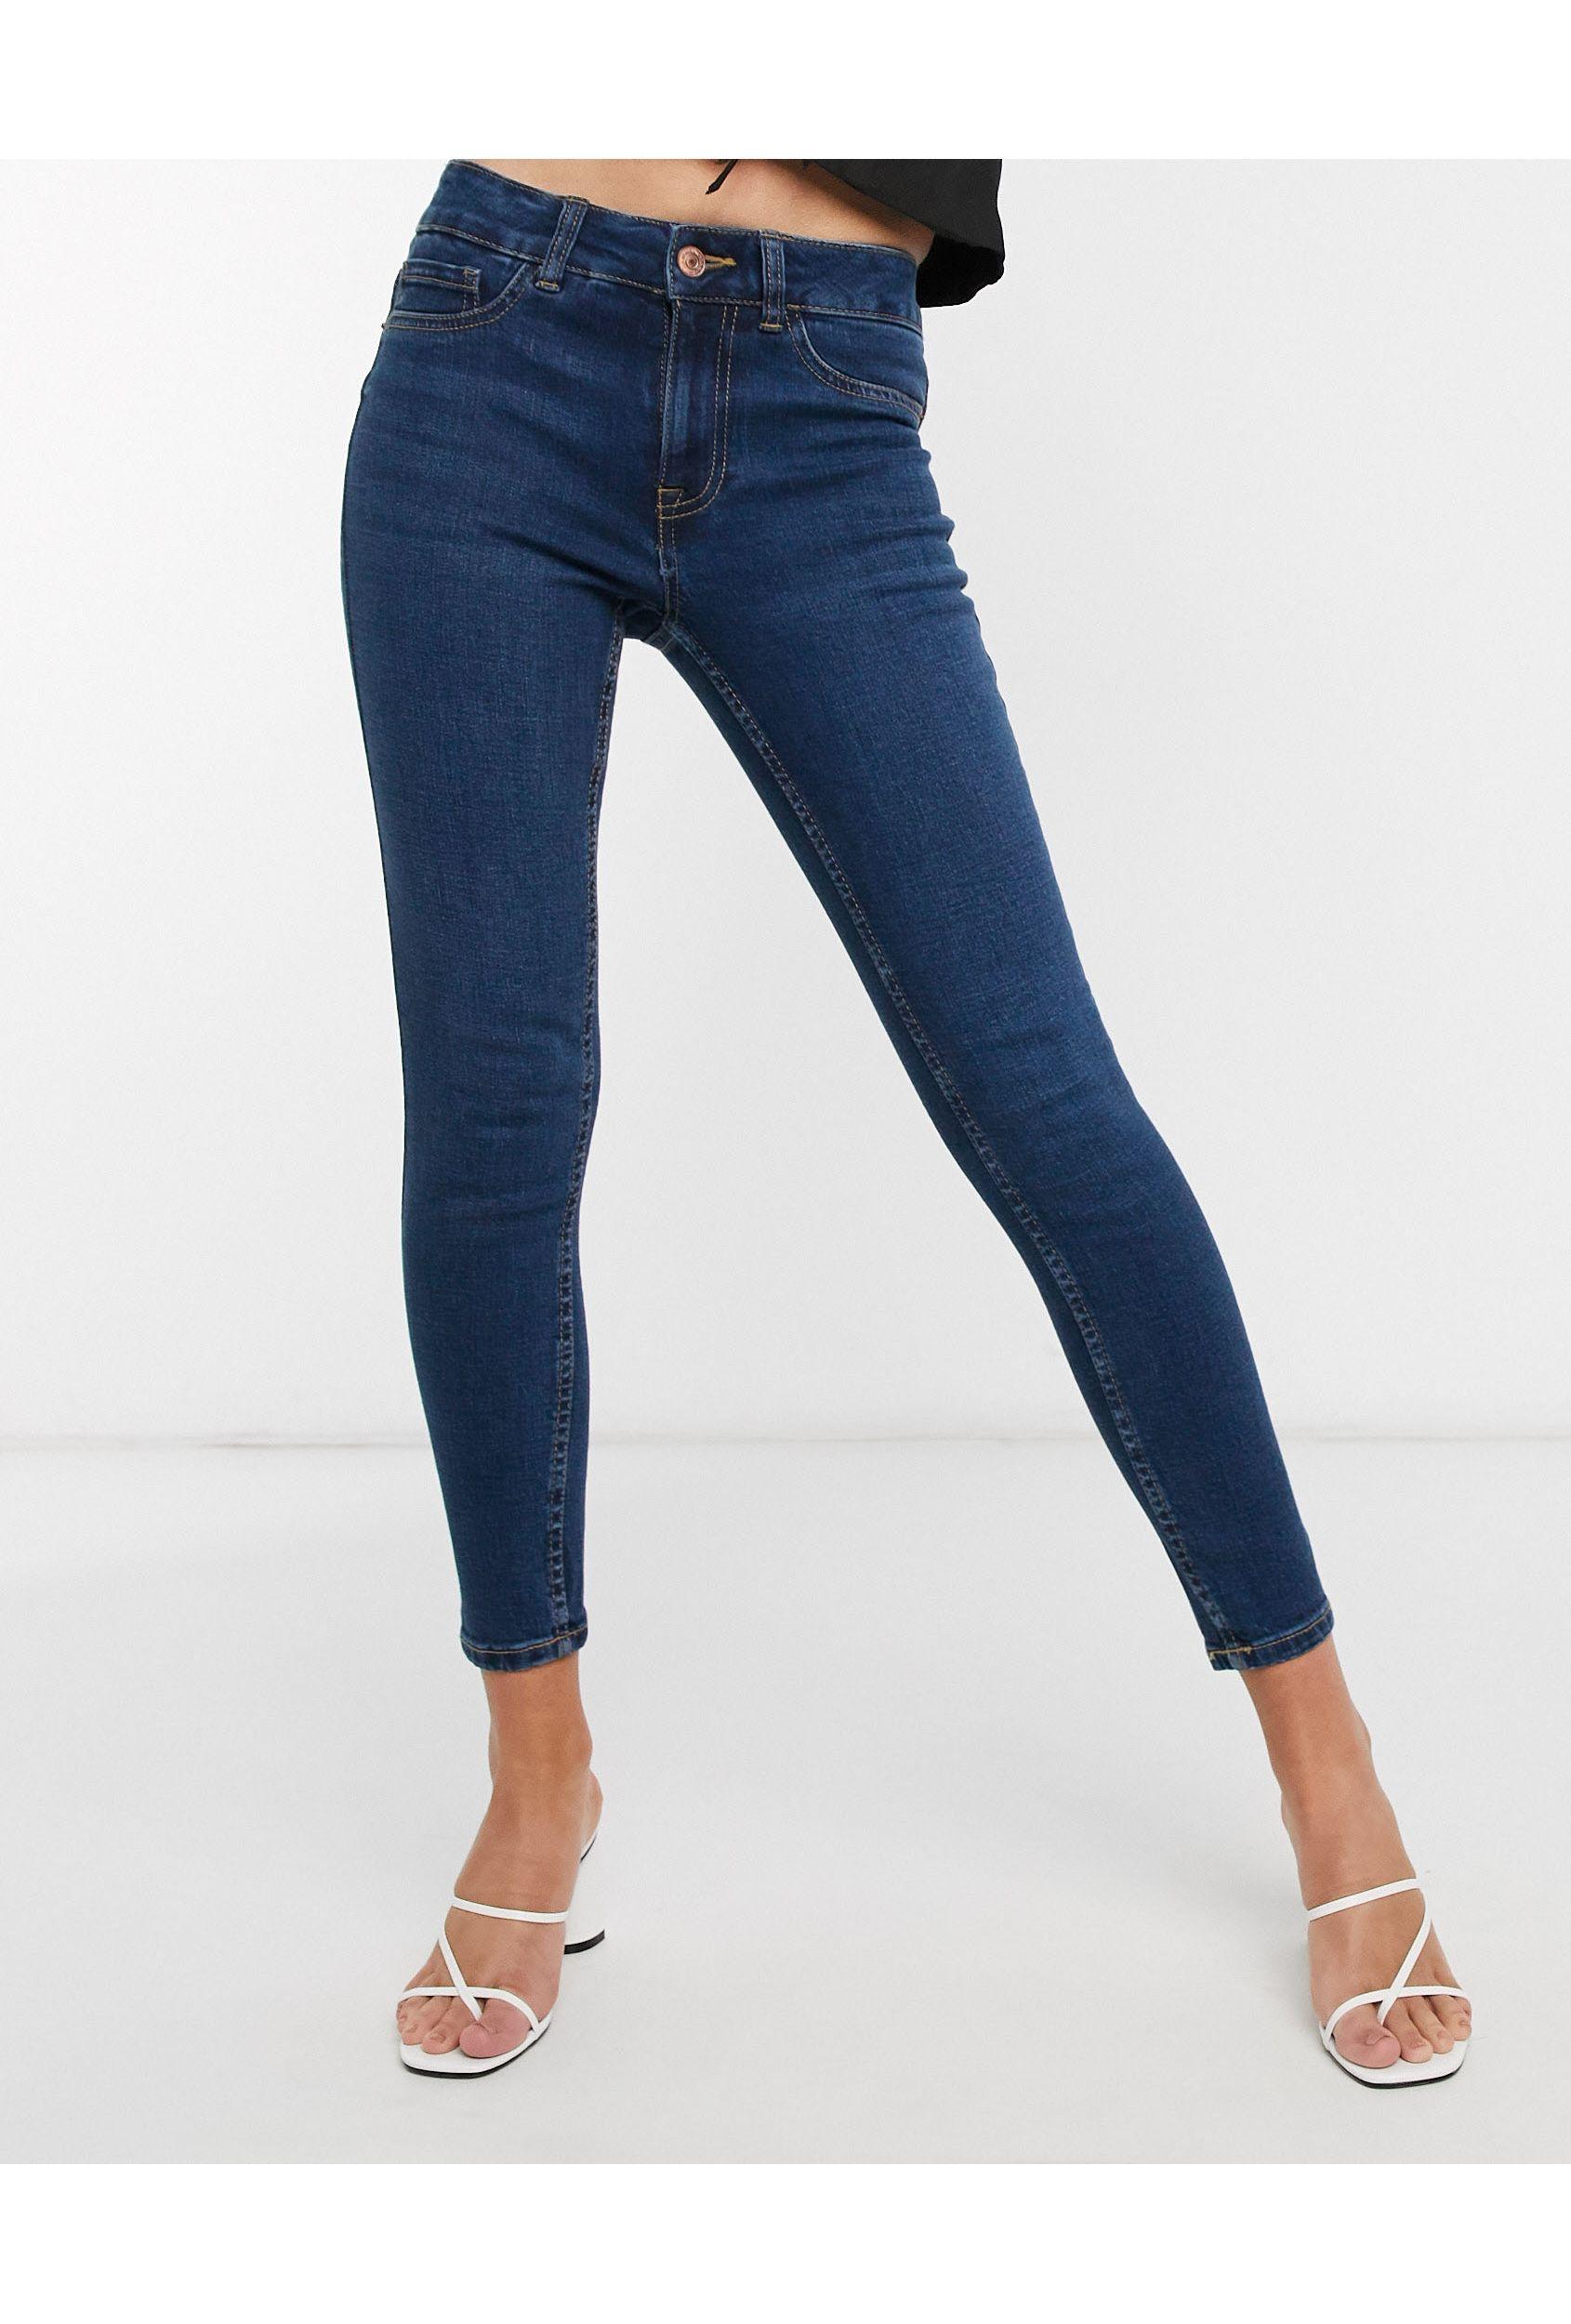 New Look Denim Skinny Jean in Blue - Lyst